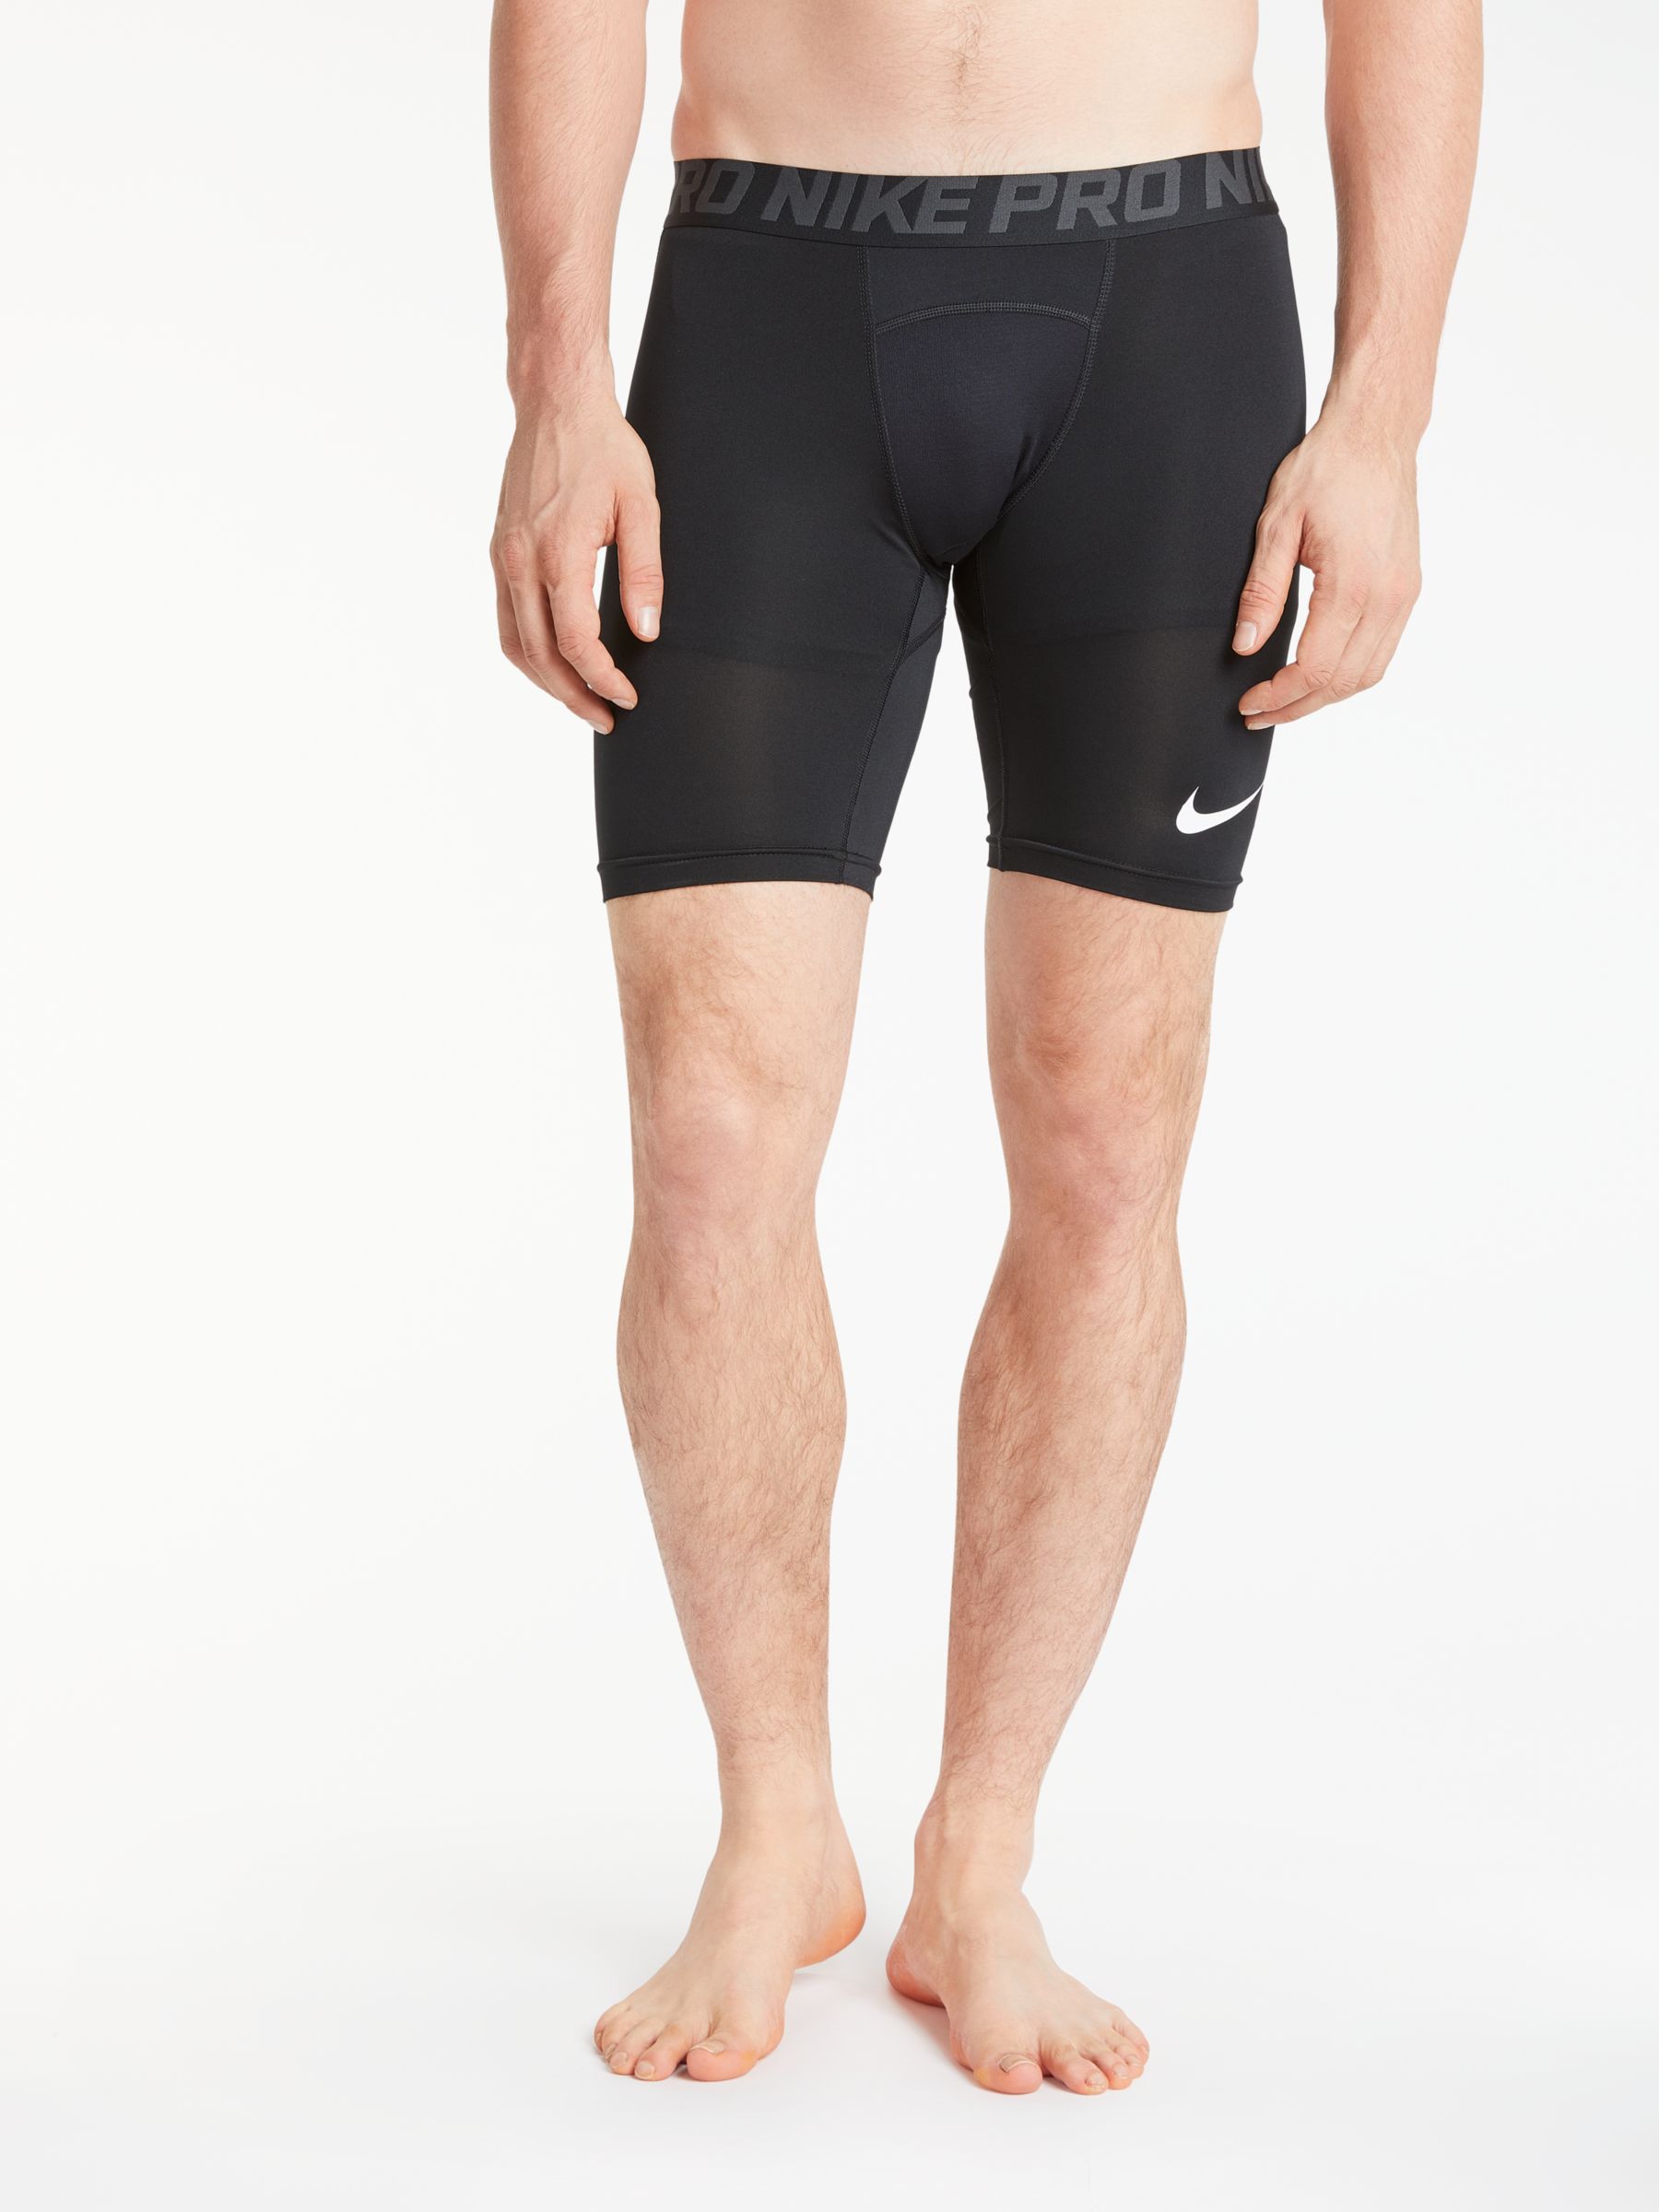 Nike Pro Compression Shorts, Black, S